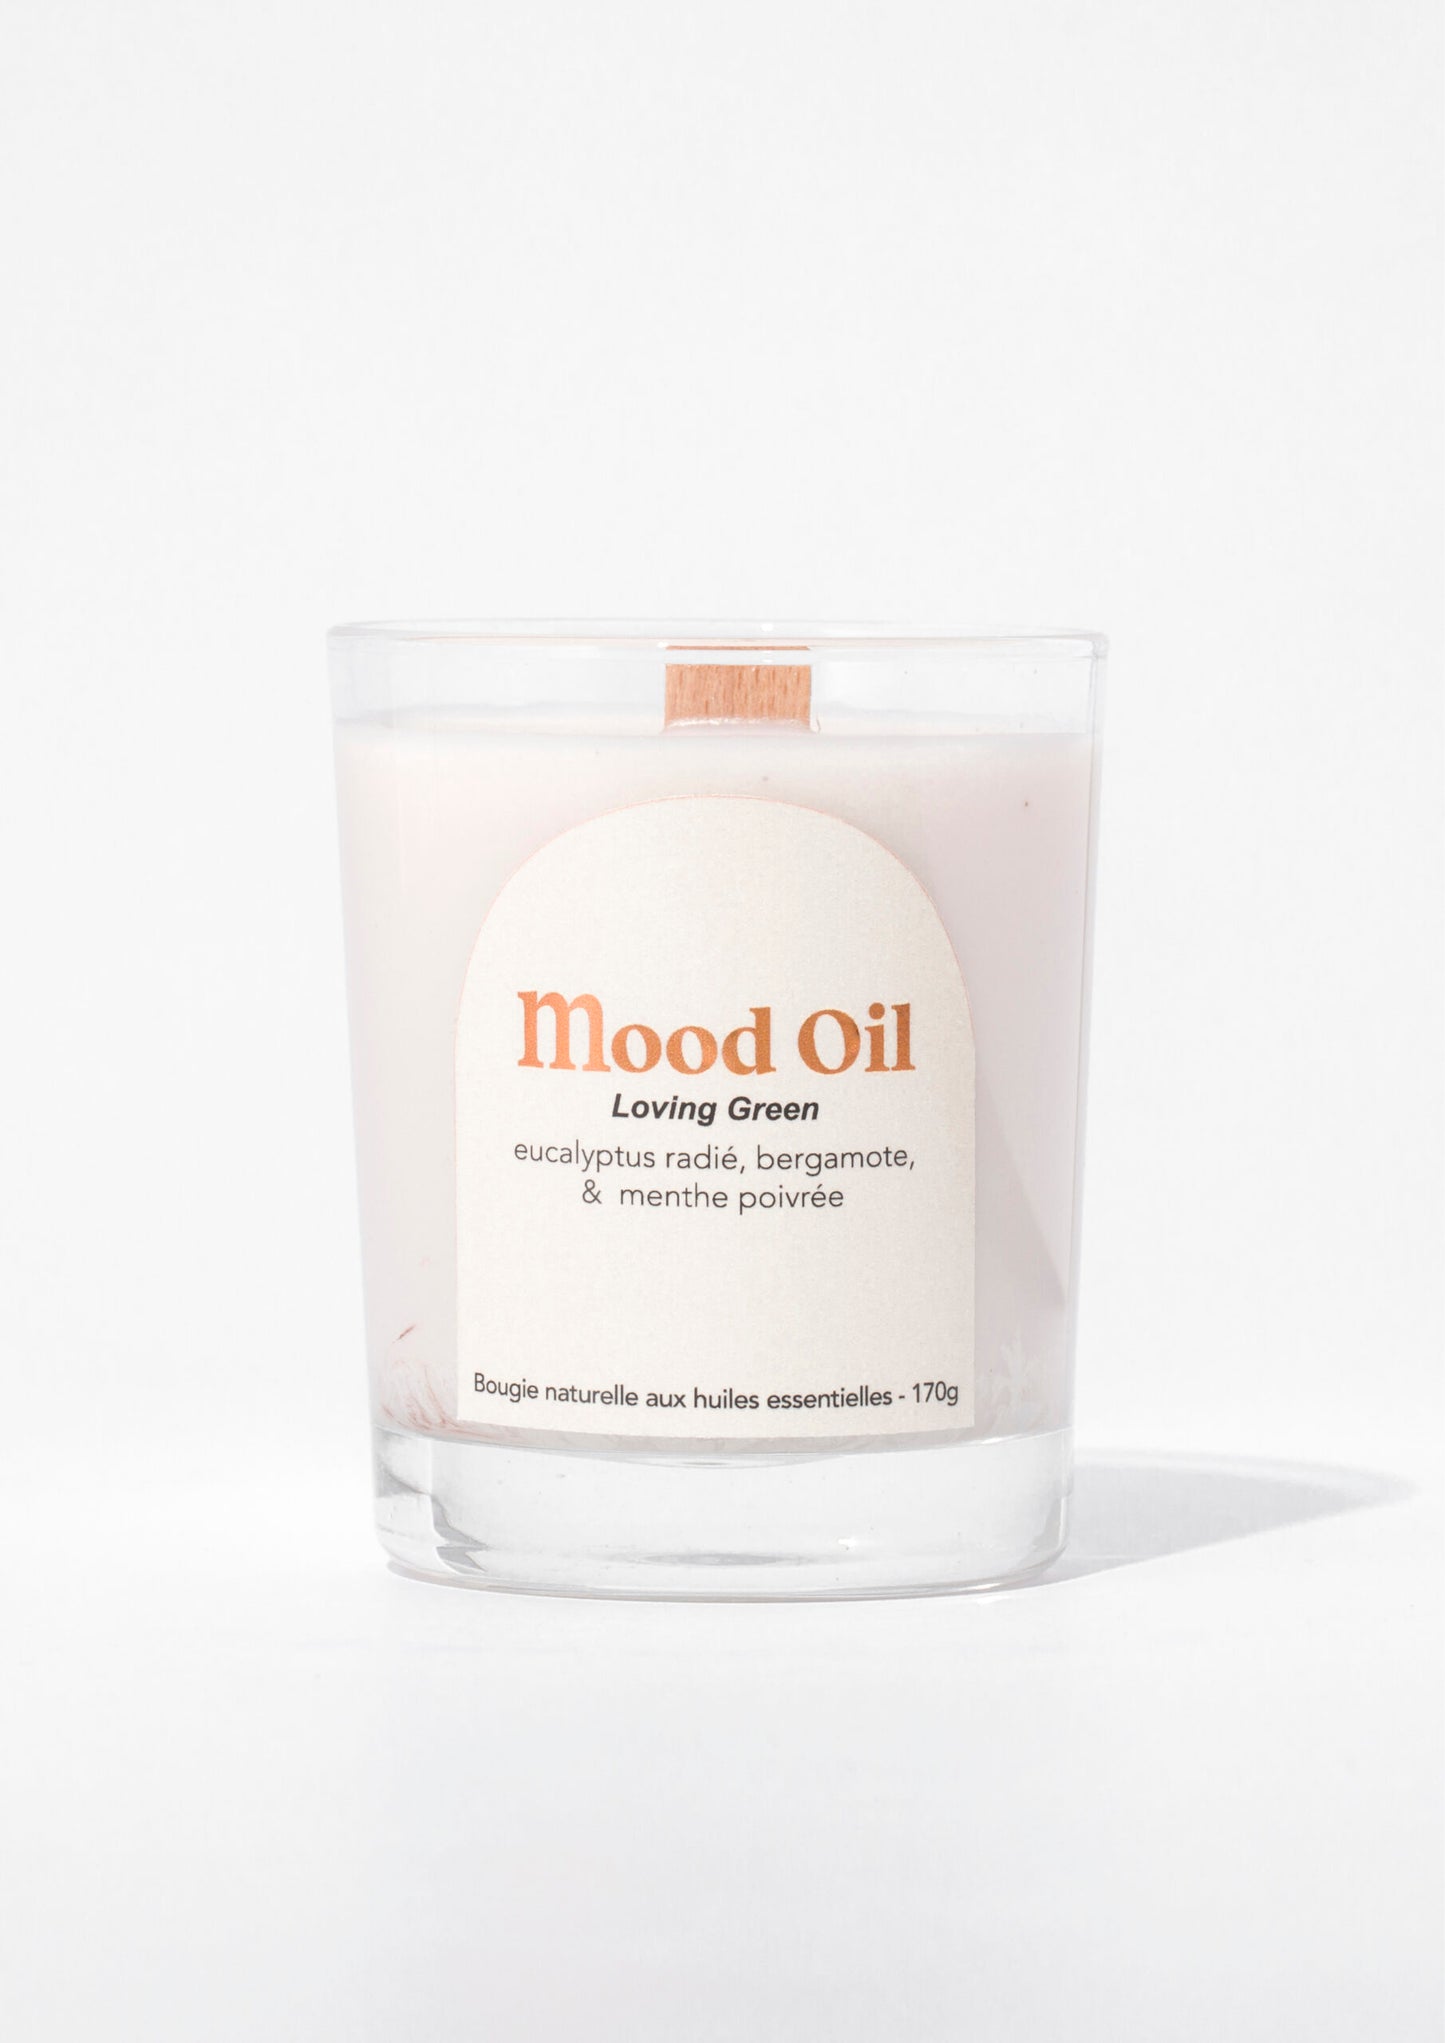 Mood Oil - bougie Loving Green - bougie detox aux huiles essentielles